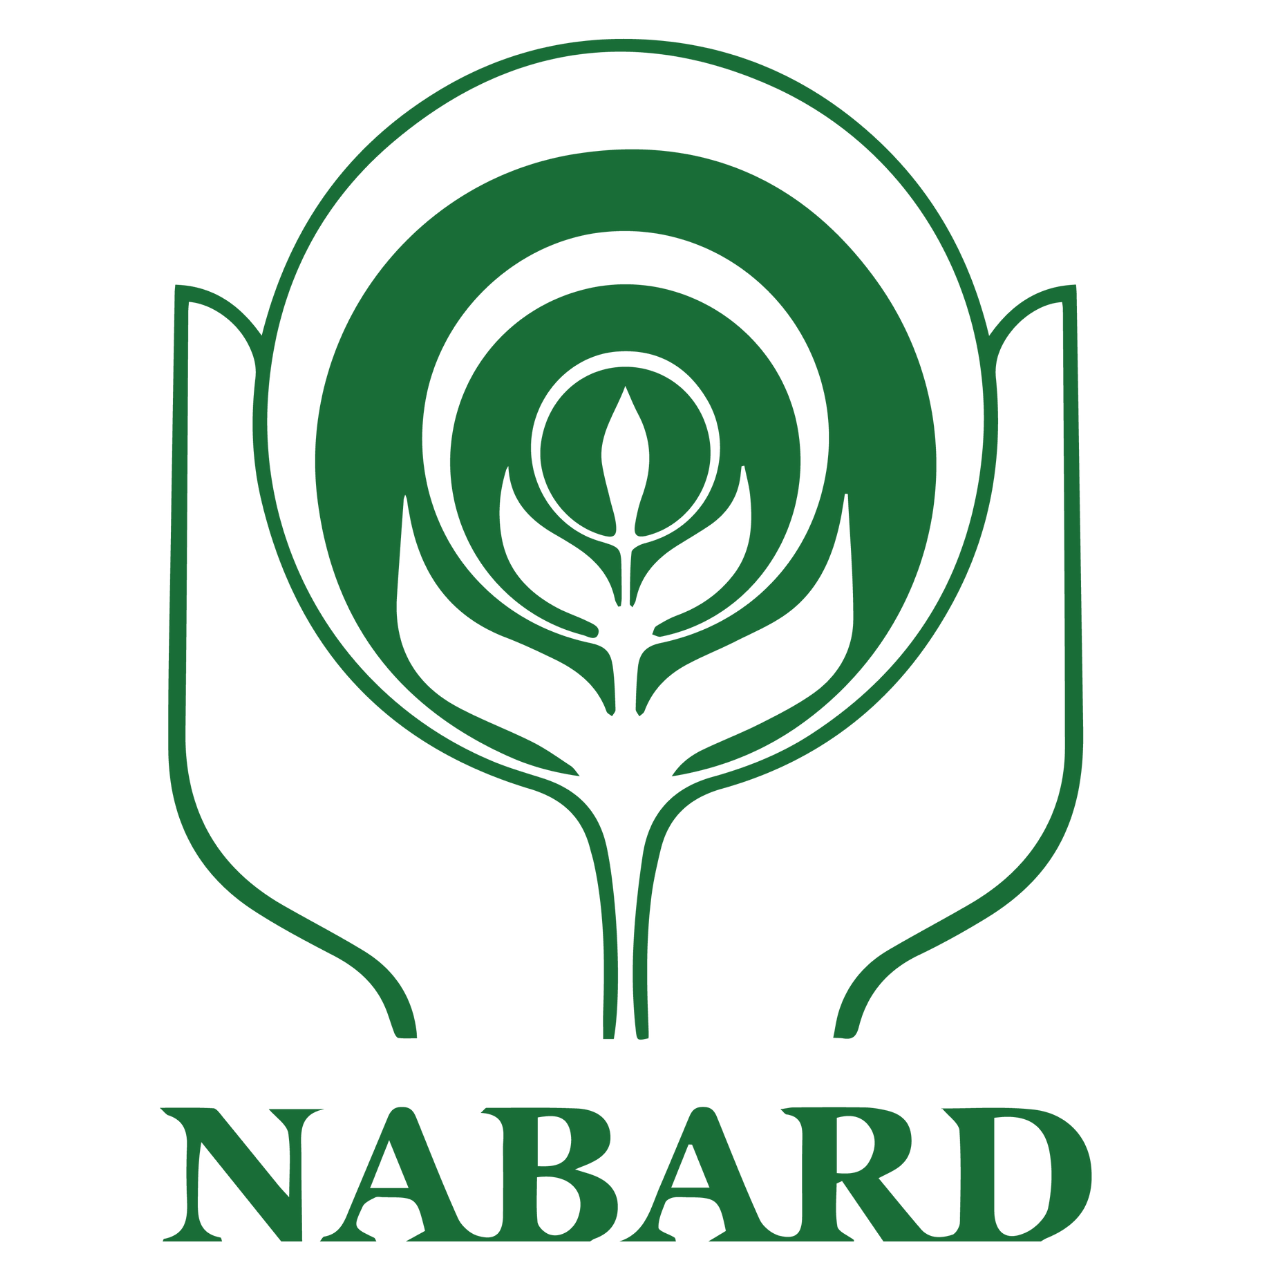 NABARD Recruitment 2021: يمكن تقديم 162 وظيفة شاغرة في NABARD اعتبارًا من 17 يوليو